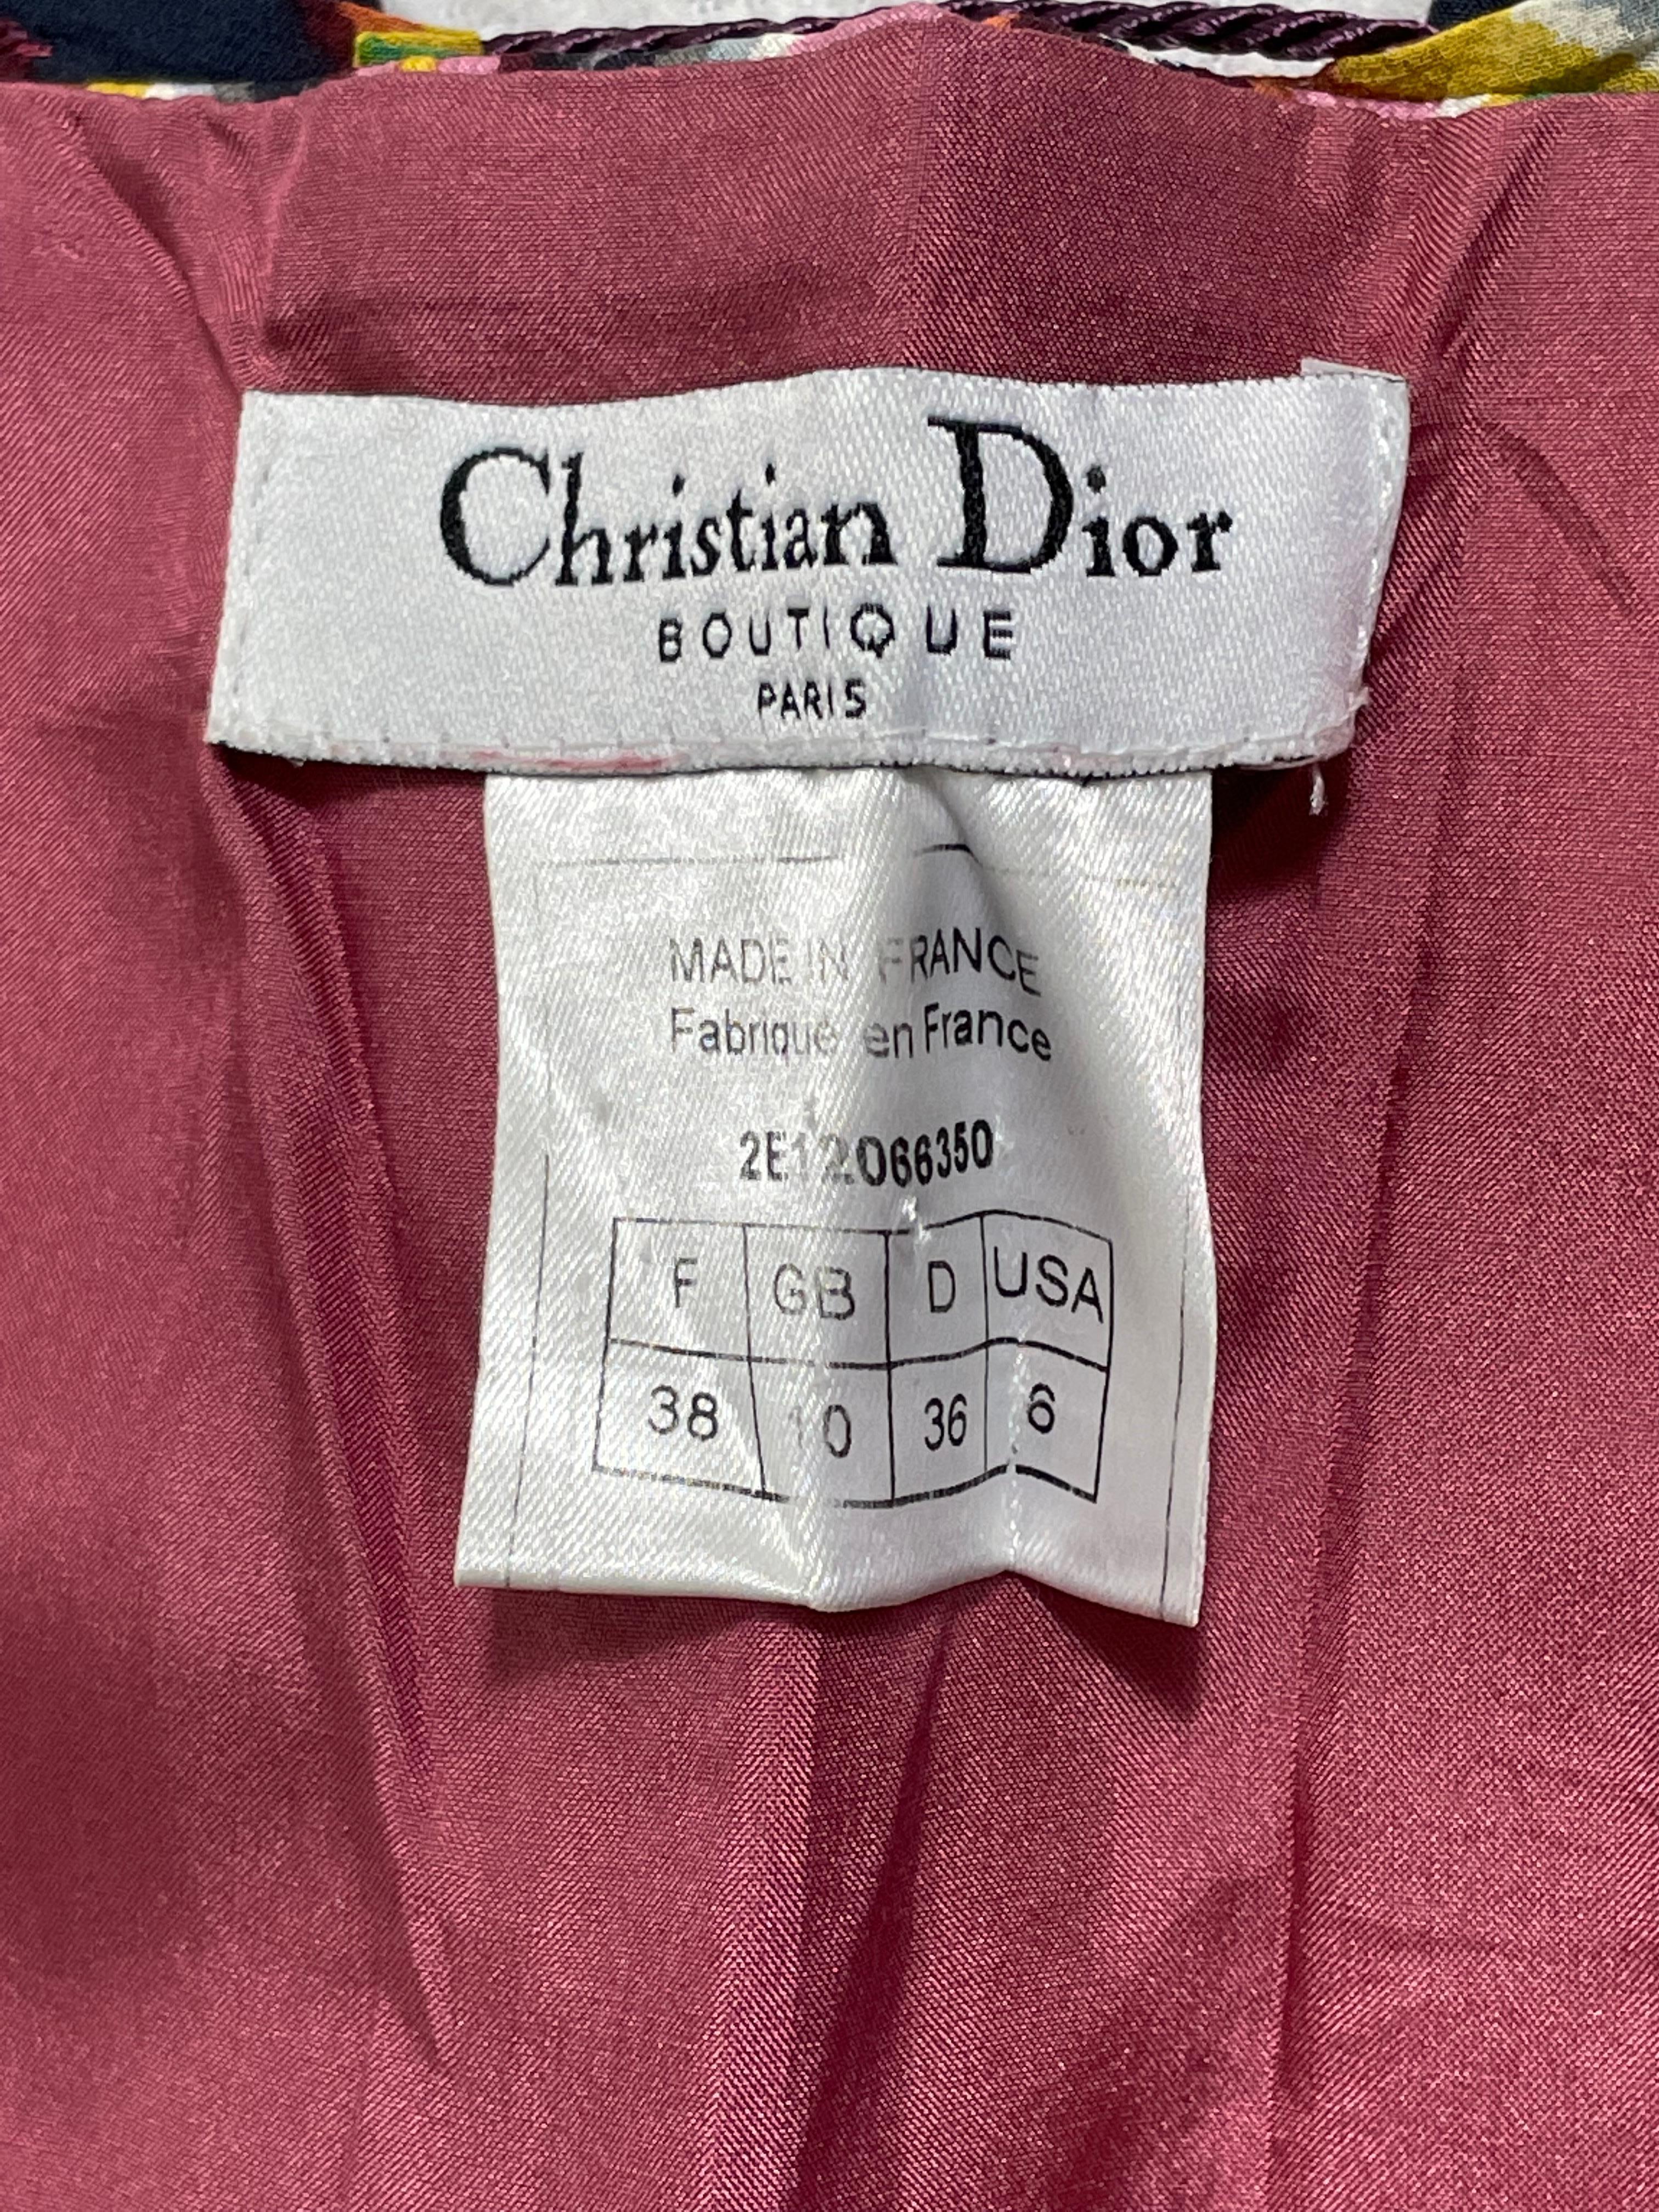 S/S 2002 Christian Dior John Galliano Rasta Bustier Strapless Maxi ...